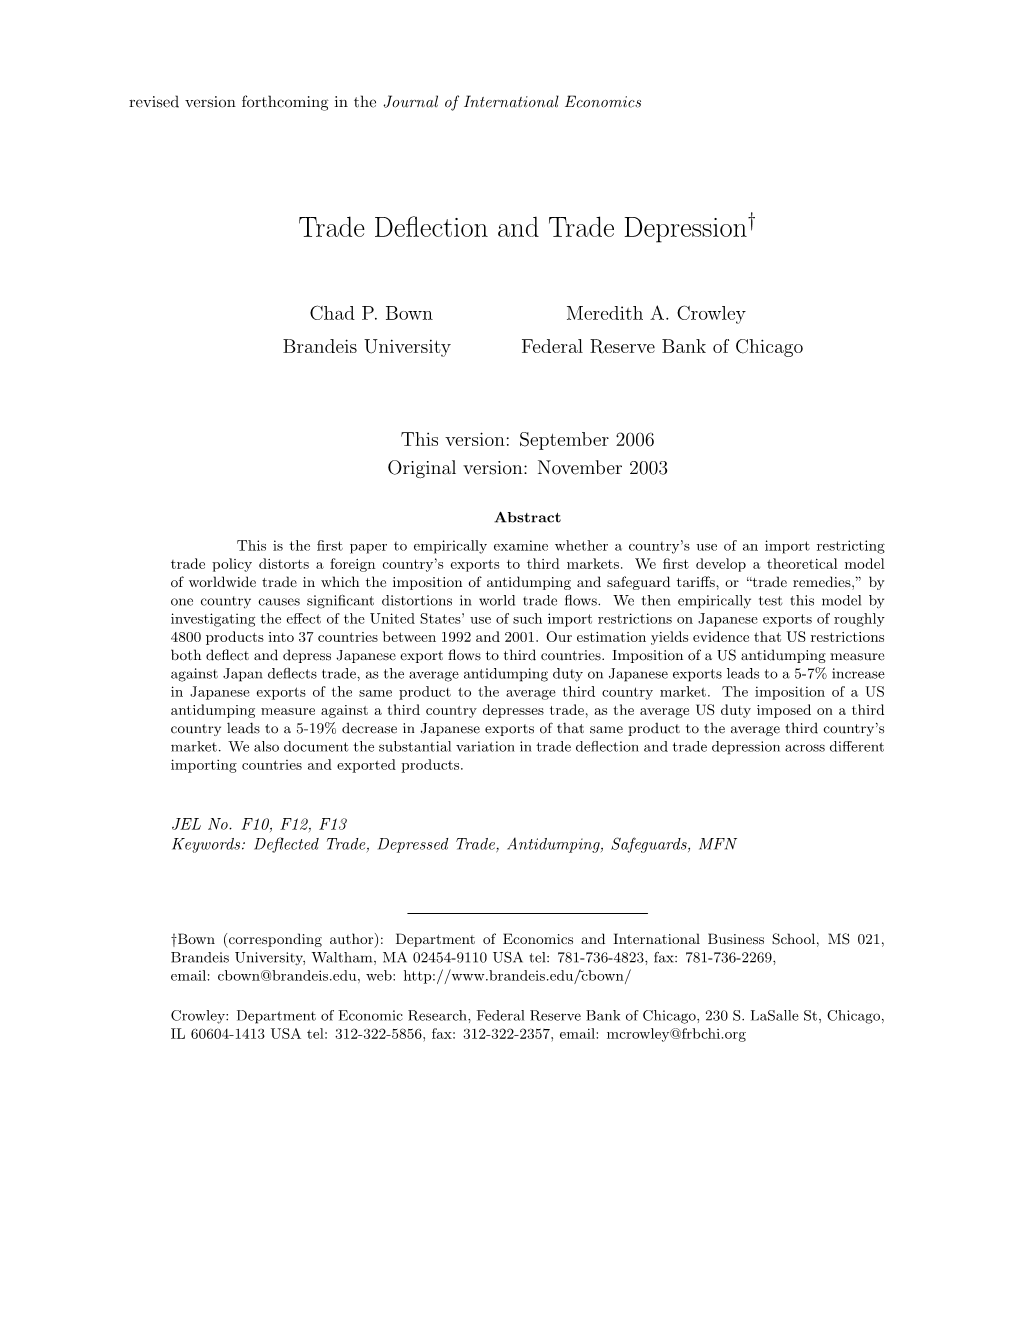 Trade Deflection and Trade Depression